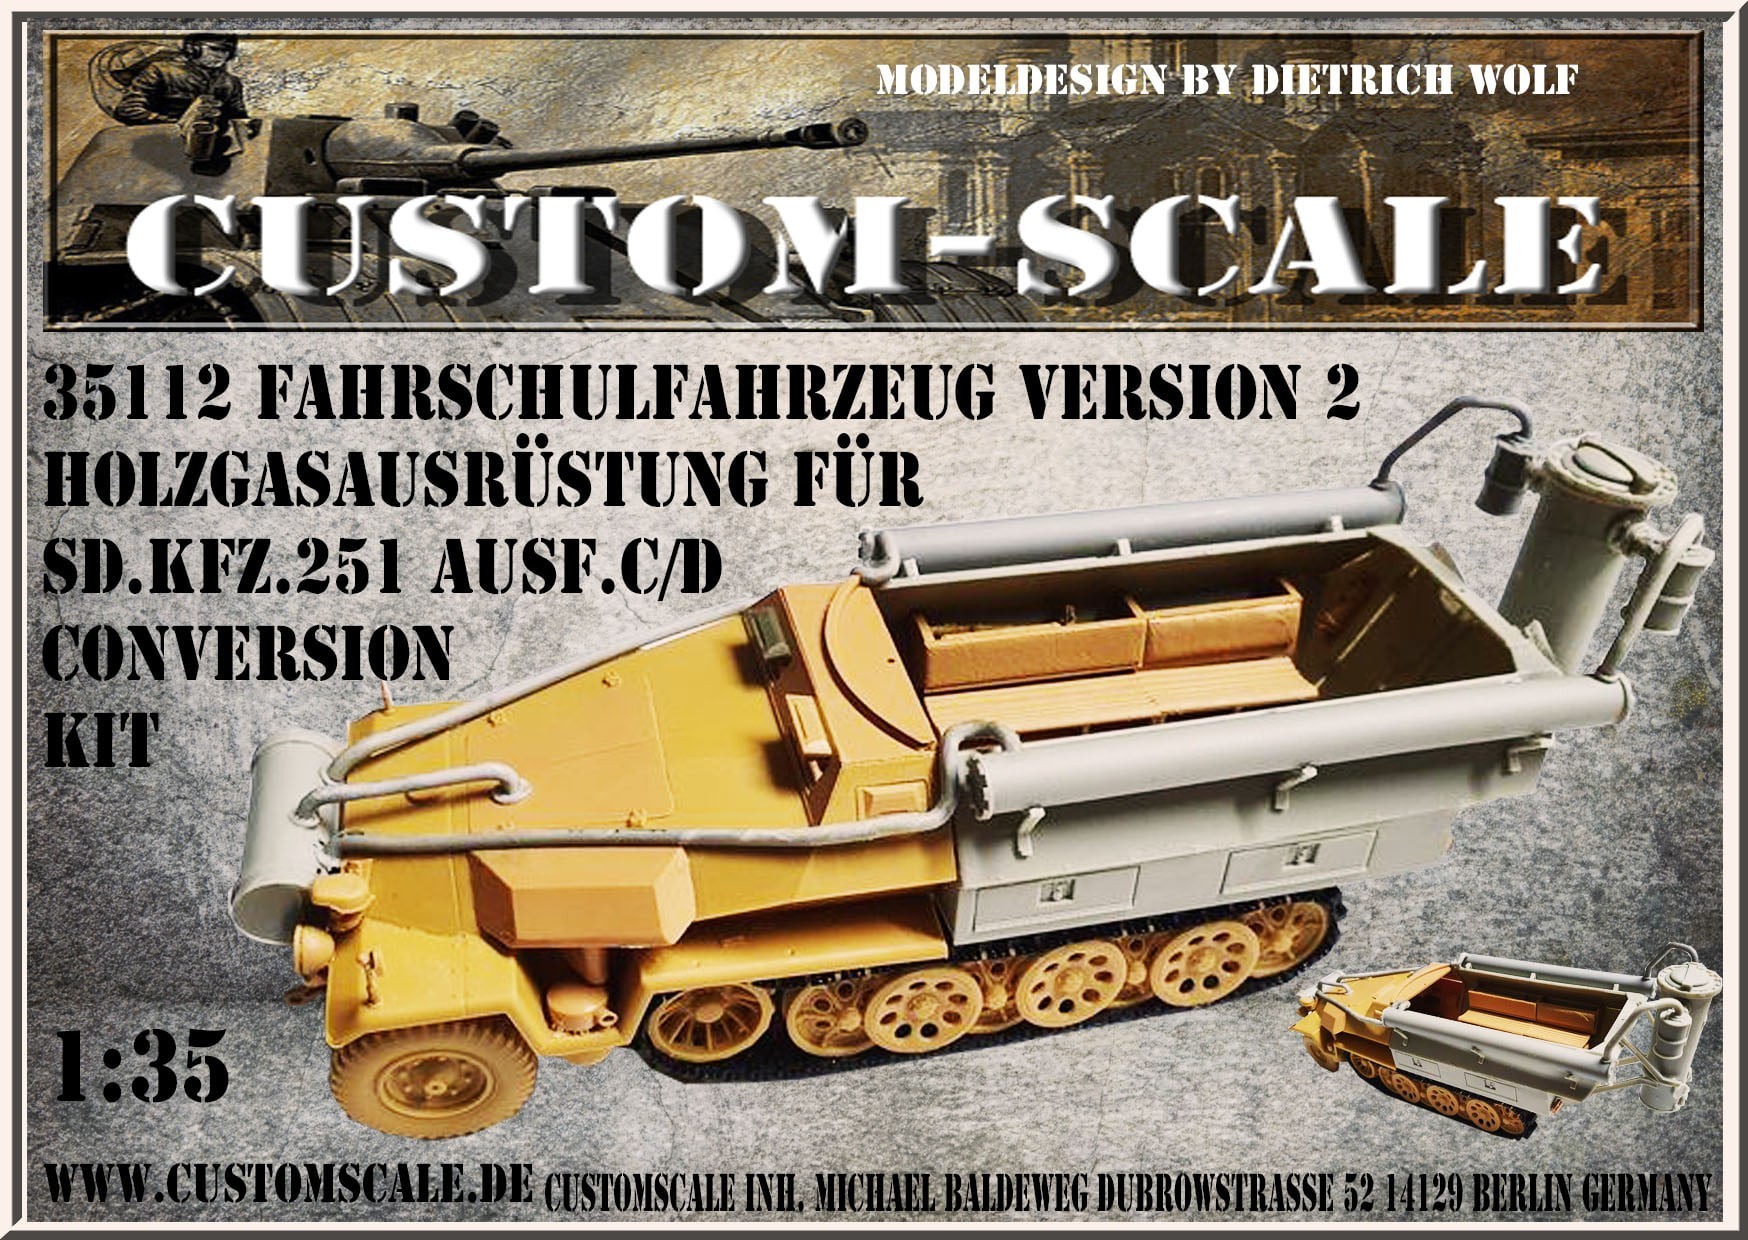 35112 Fahrschulfahrzeug Version 2 Holzgasausrüstung für Sd.Kfz.251 Ausf. C/D Conversion Kit